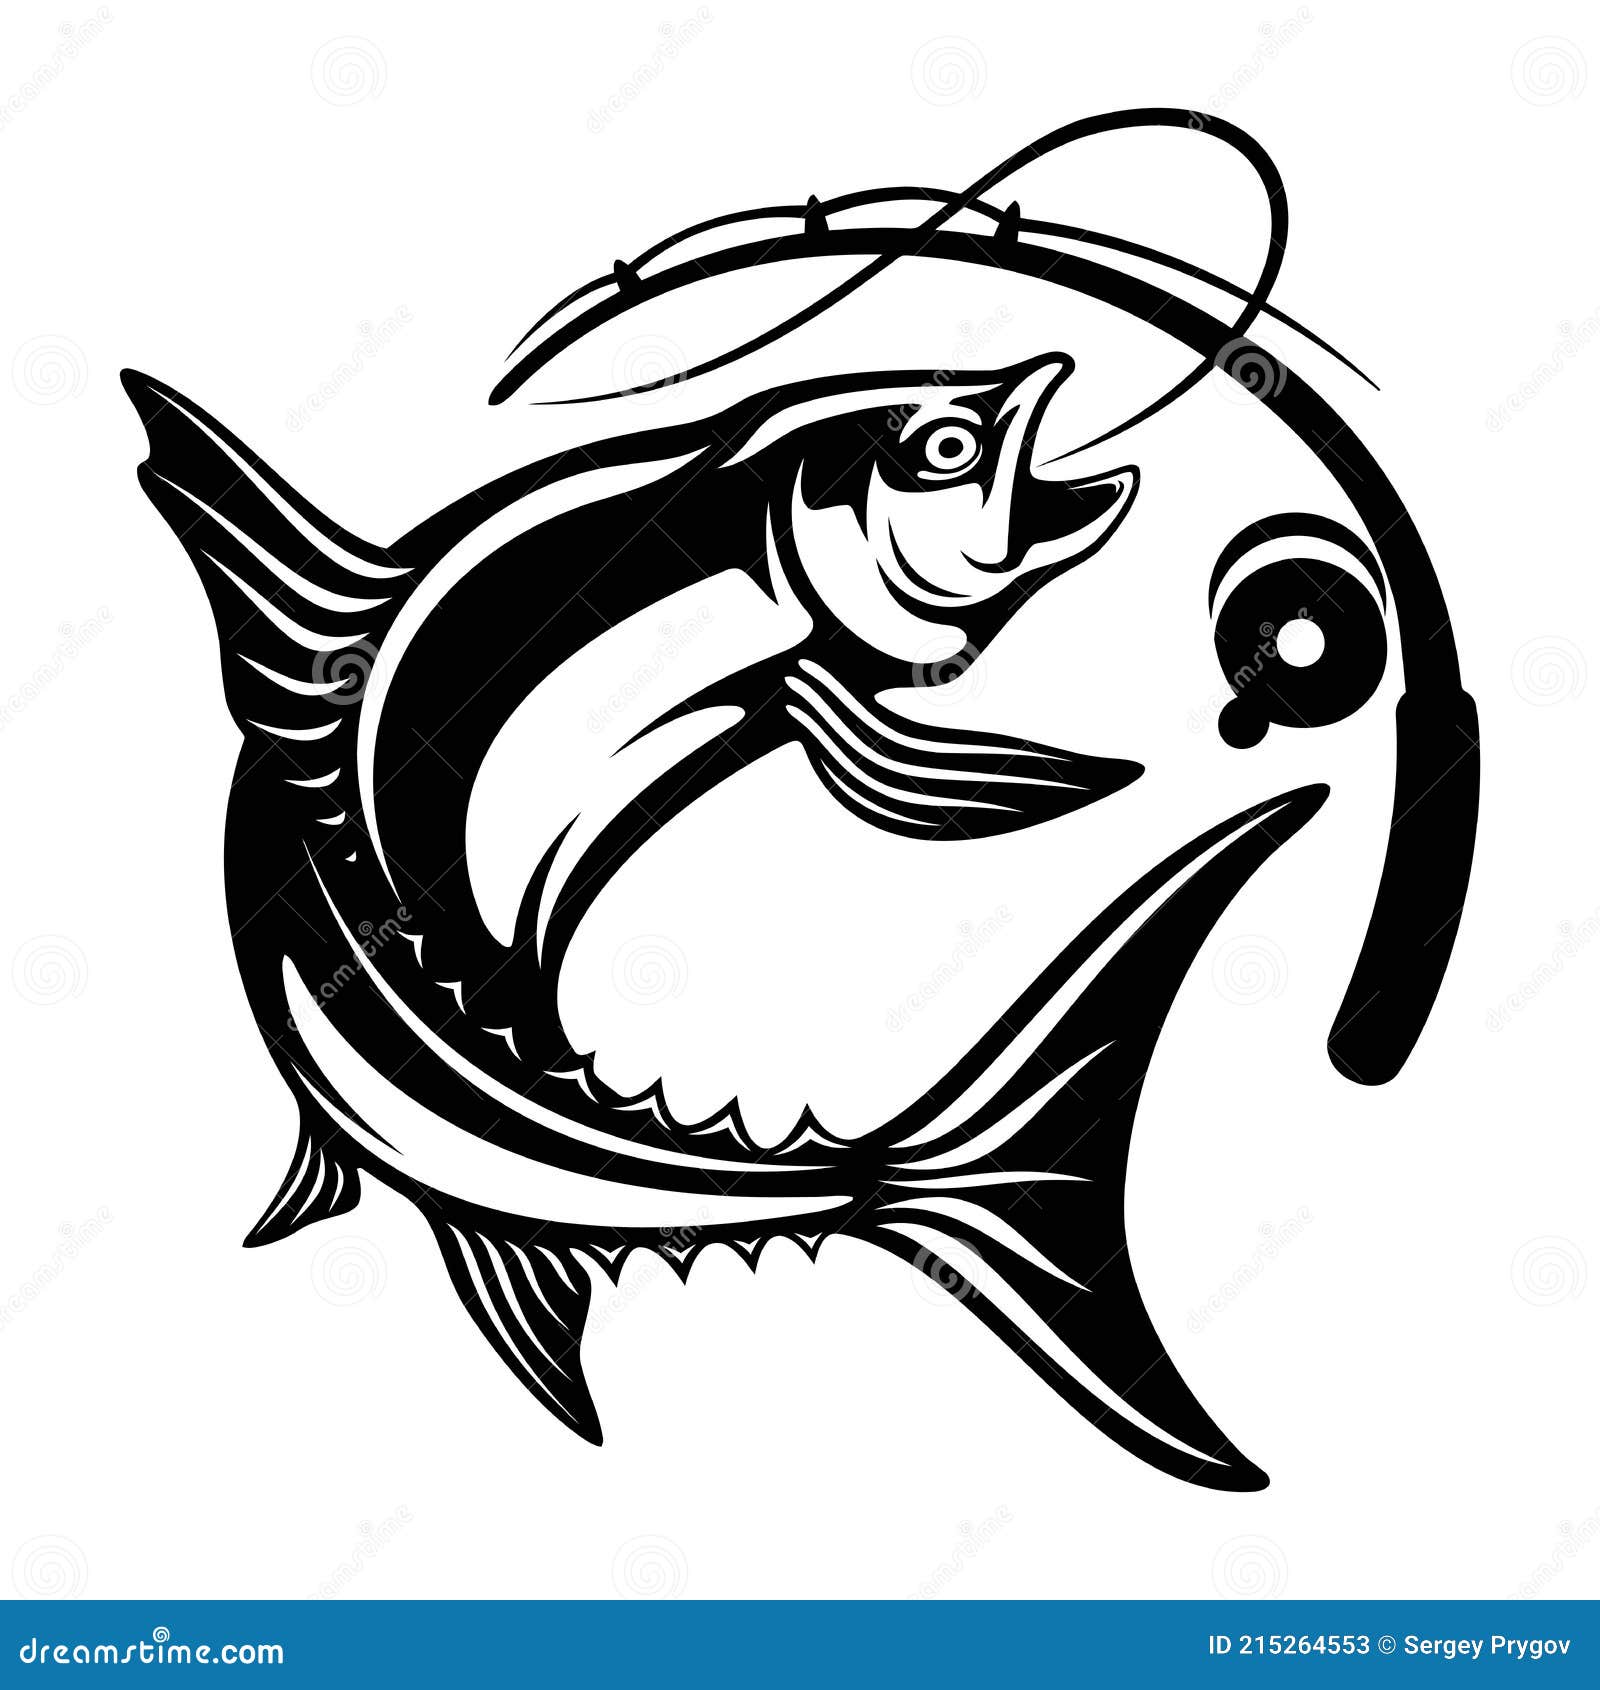 Salmon Fish and Fishing Rod - Fishing Logo. Template Club Emblem